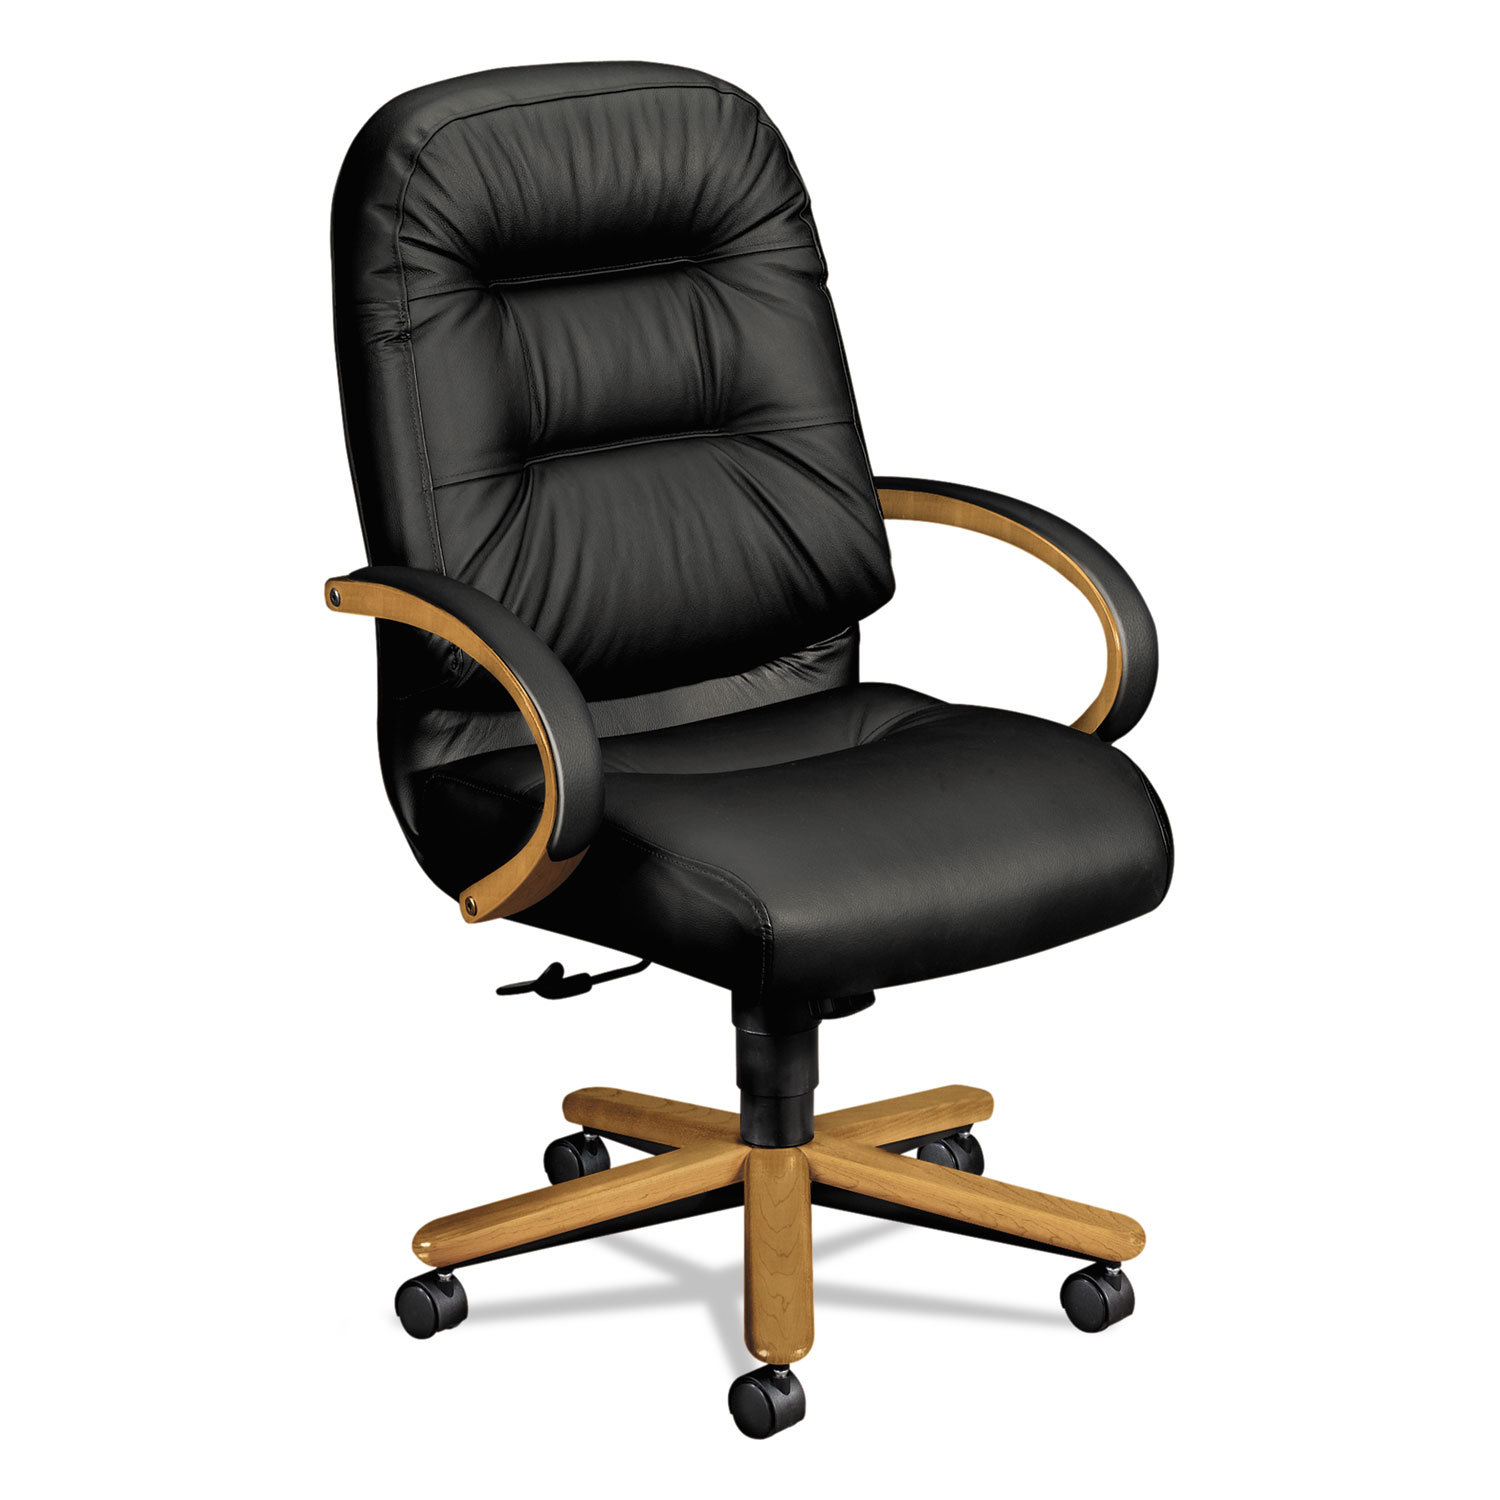  HON H2191.C.SR11 2190 Pillow-Soft Wood Series Executive High-Back Chair, Harvest/Black Leather (HON2191CSR11) 